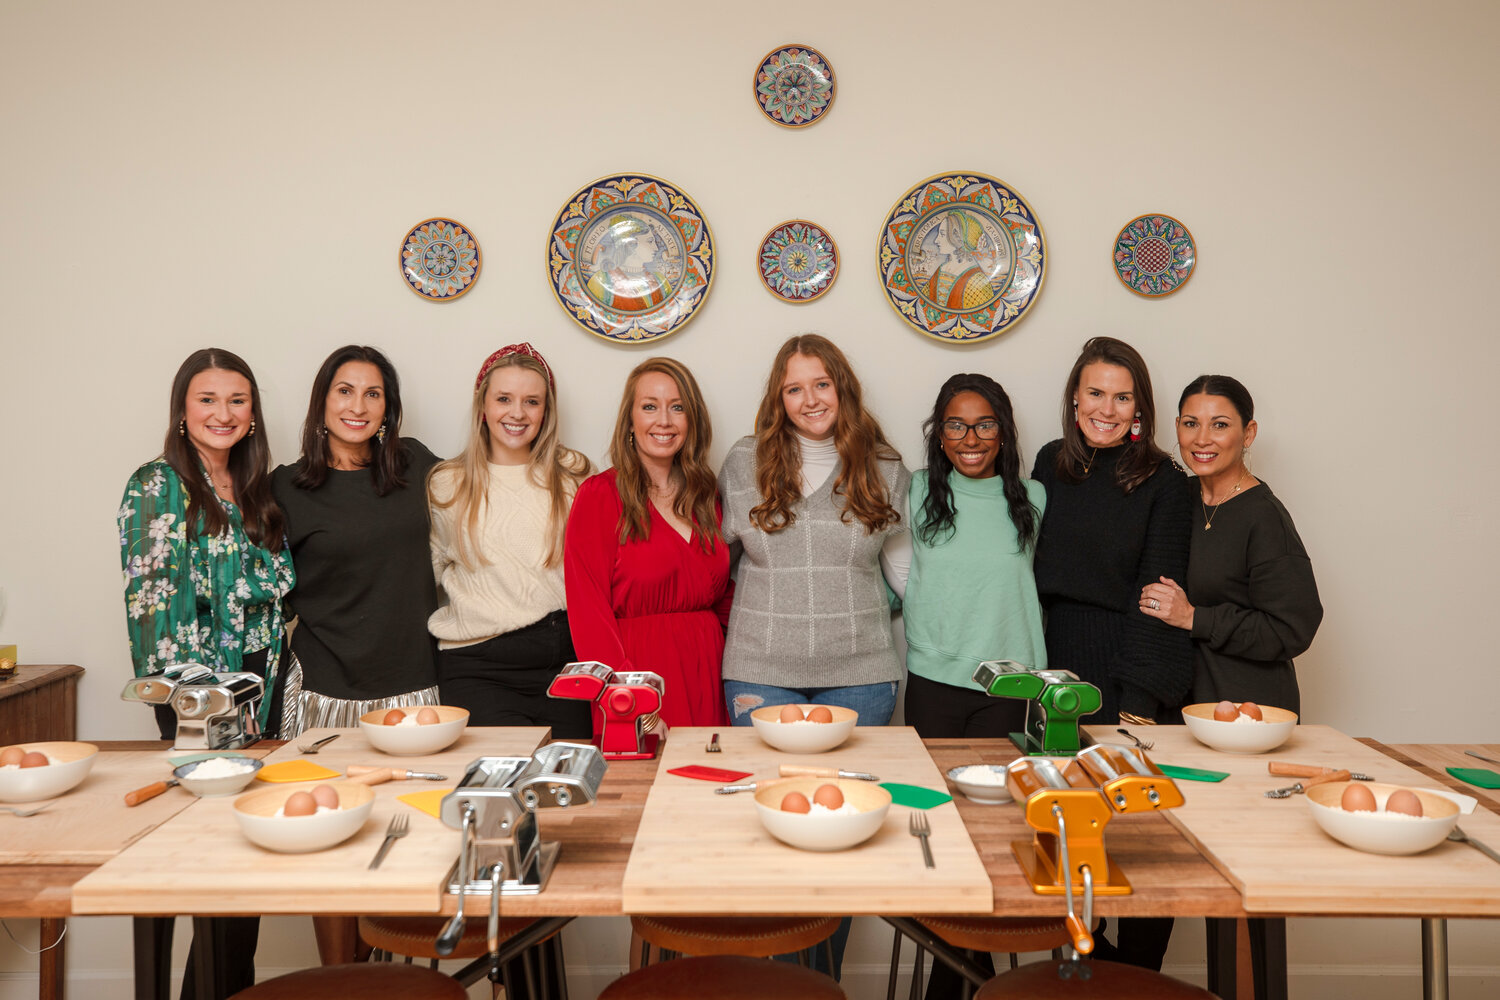 Marilen Rutland teaches pasta making classes at Mari’s Italian Cooking Lab in Fairhope.